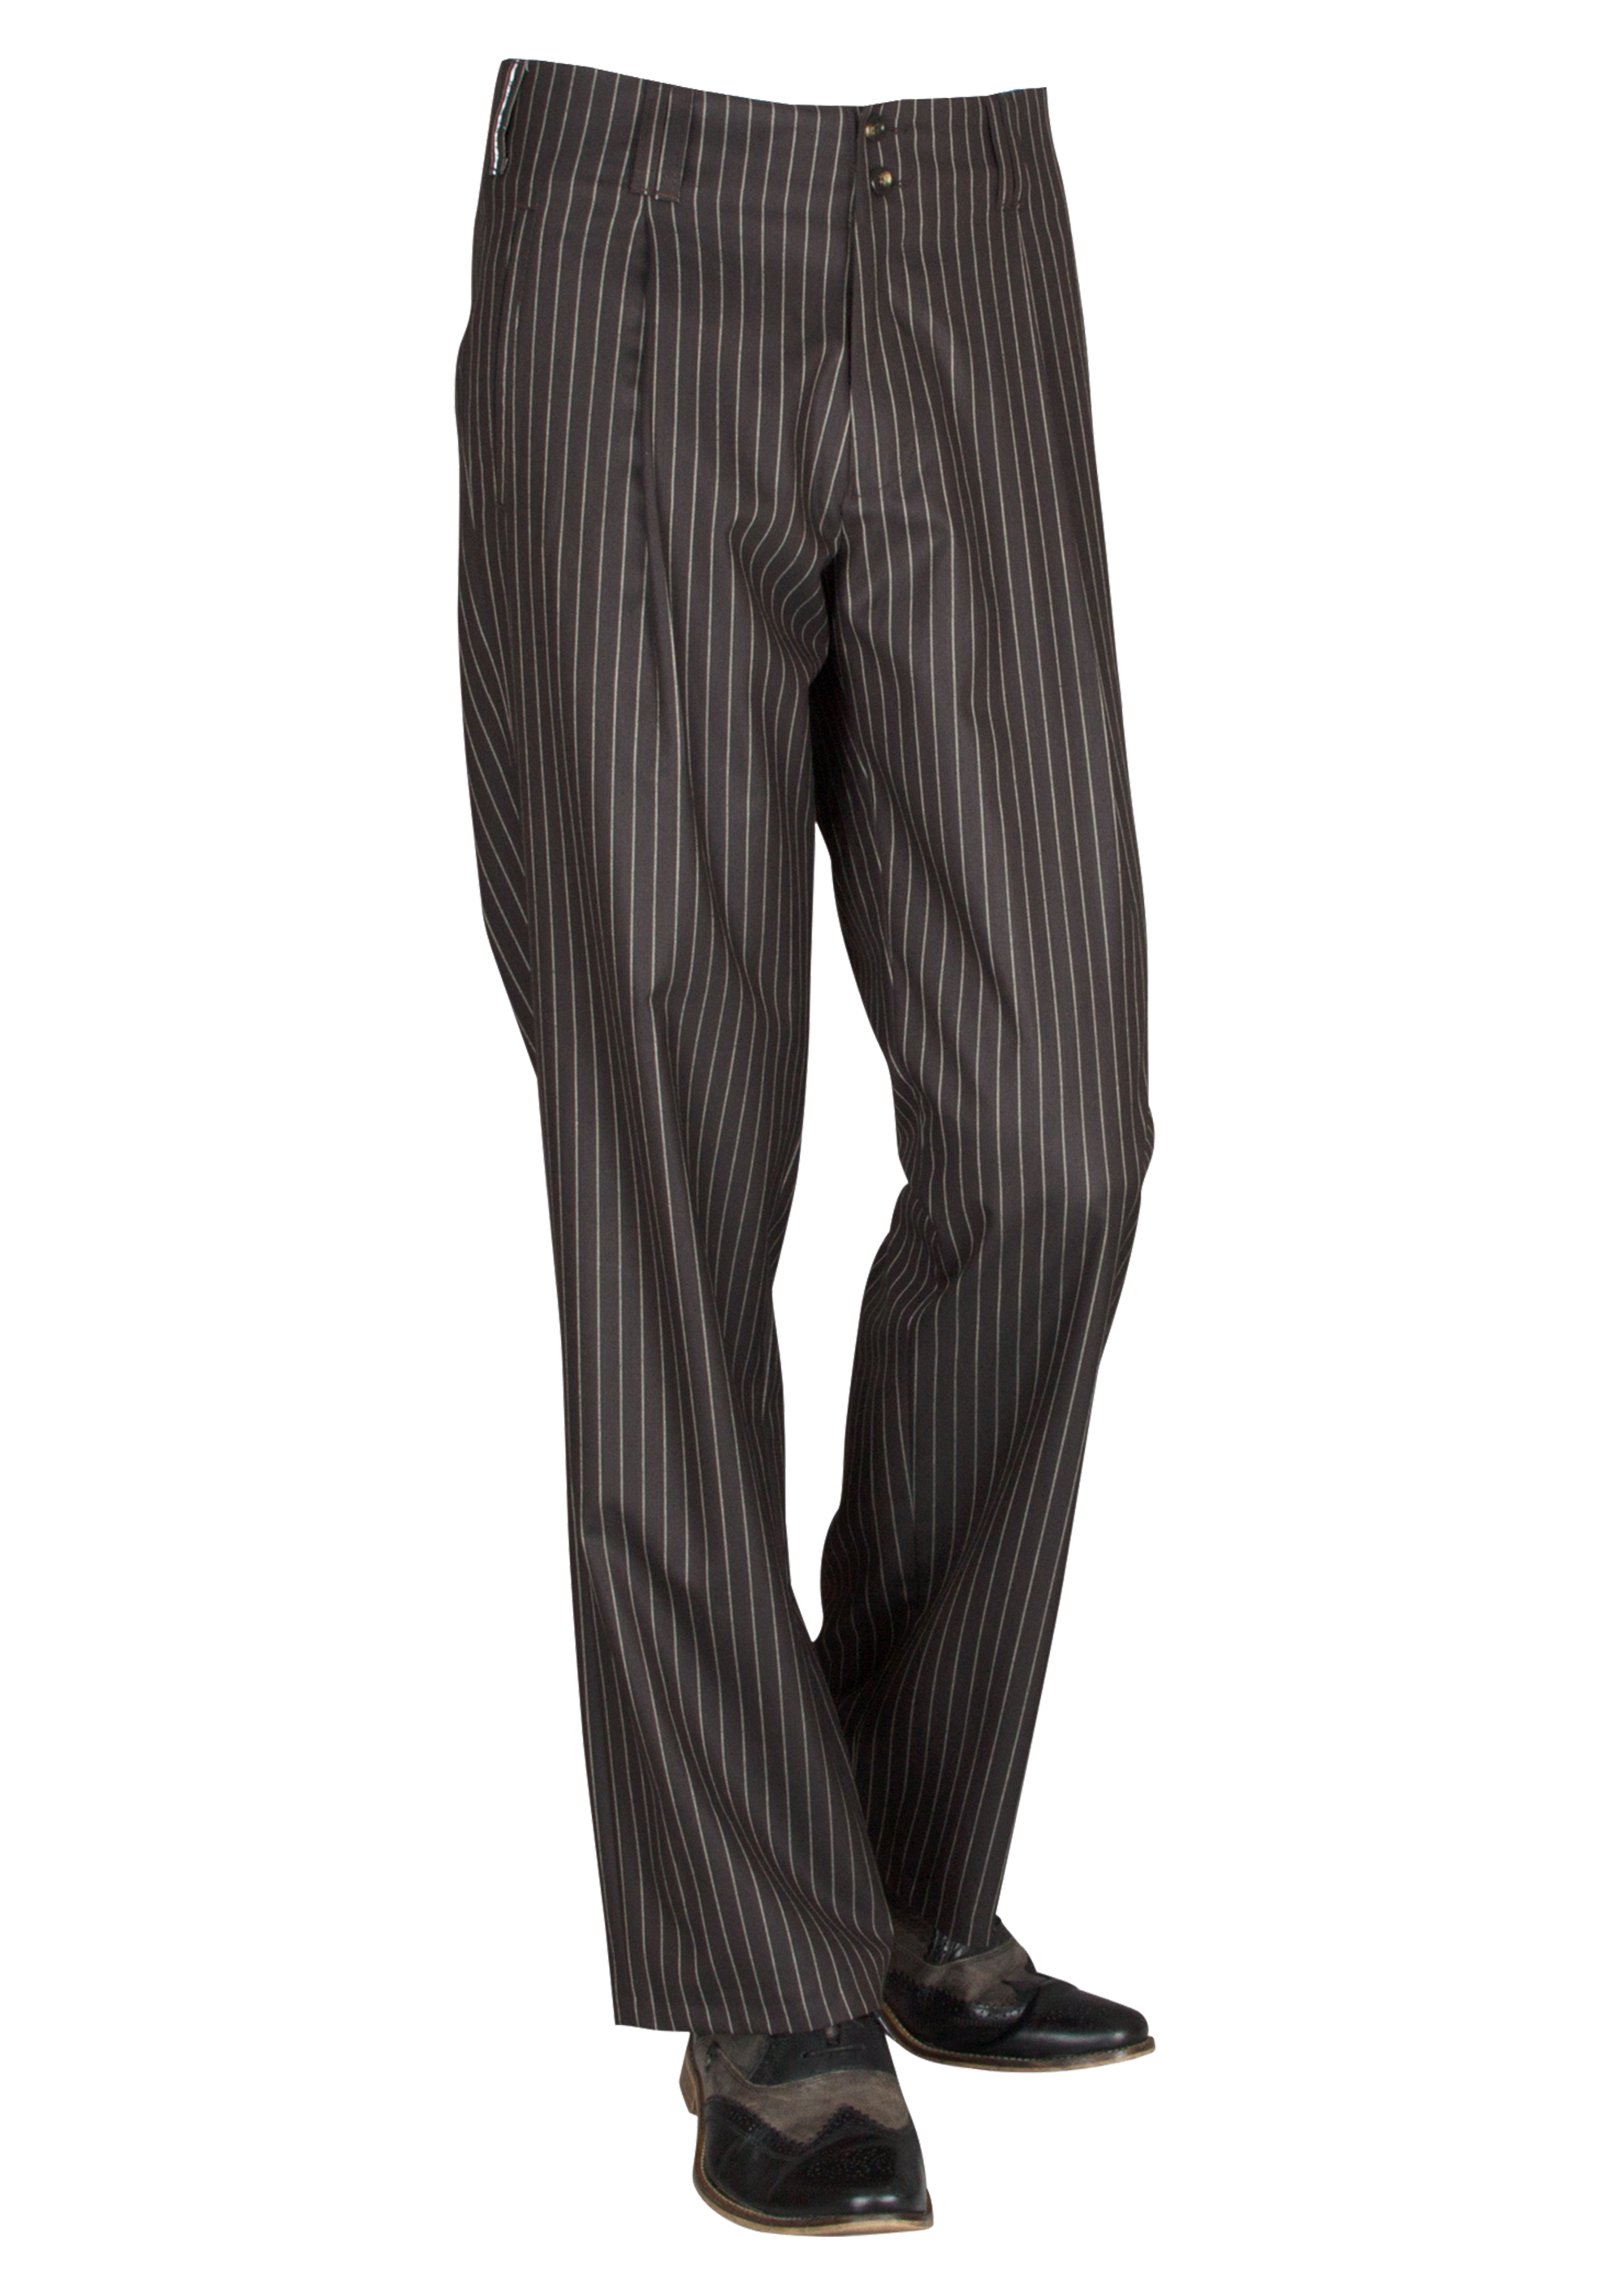 Herrenmode online kaufen | fifties style mens trouser, h.k.mandel  bundfaltenhose, herren tanzhosen, herrenausstatter hkmandel